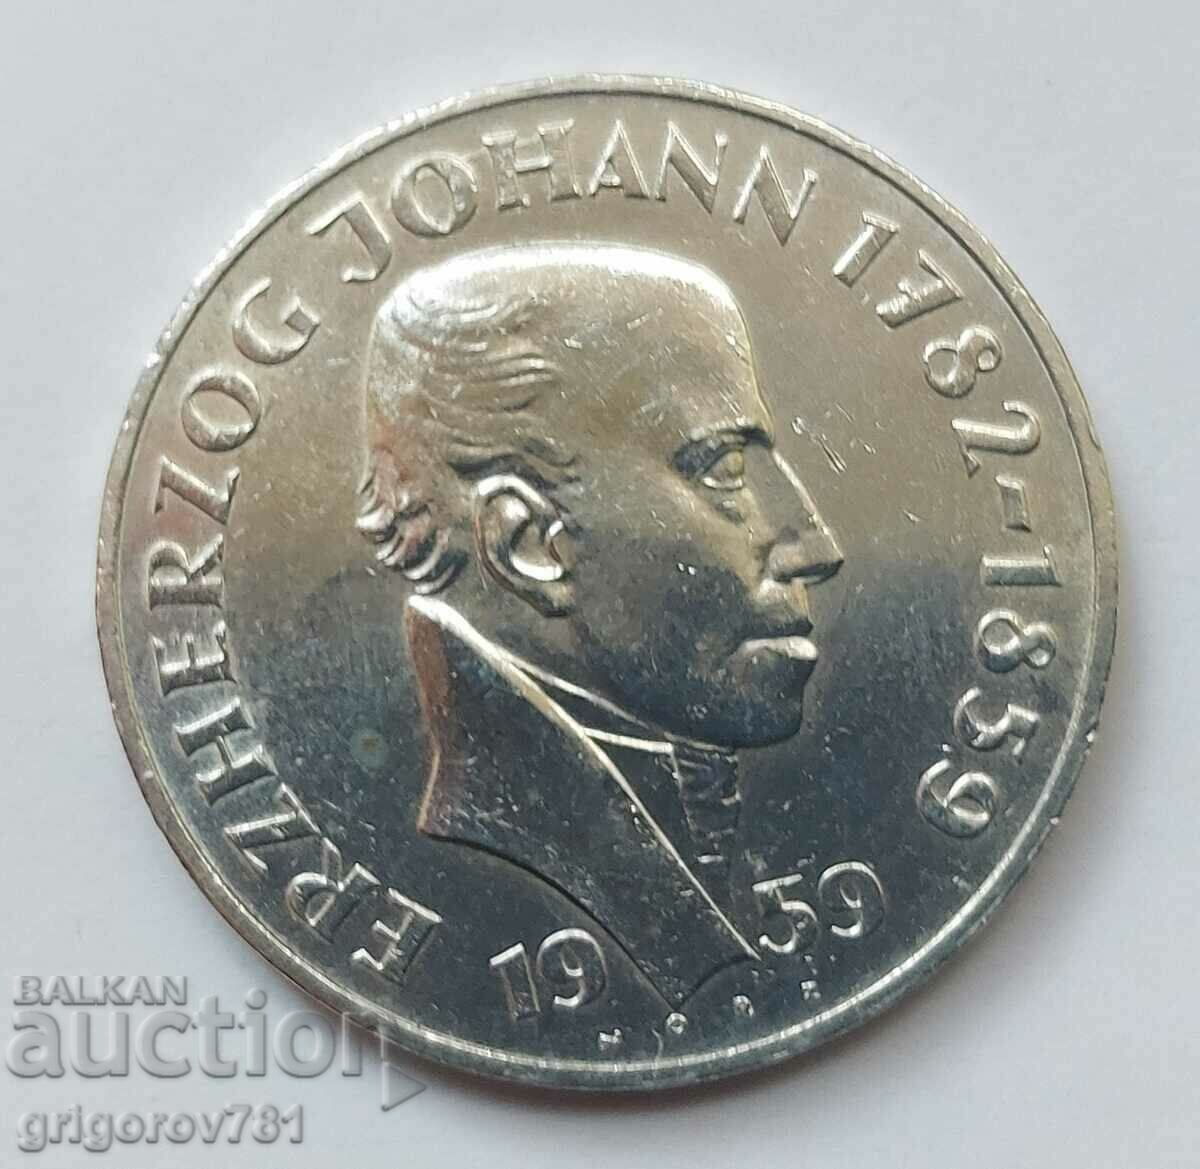 25 Shillings Silver Austria 1959 - Silver Coin #11